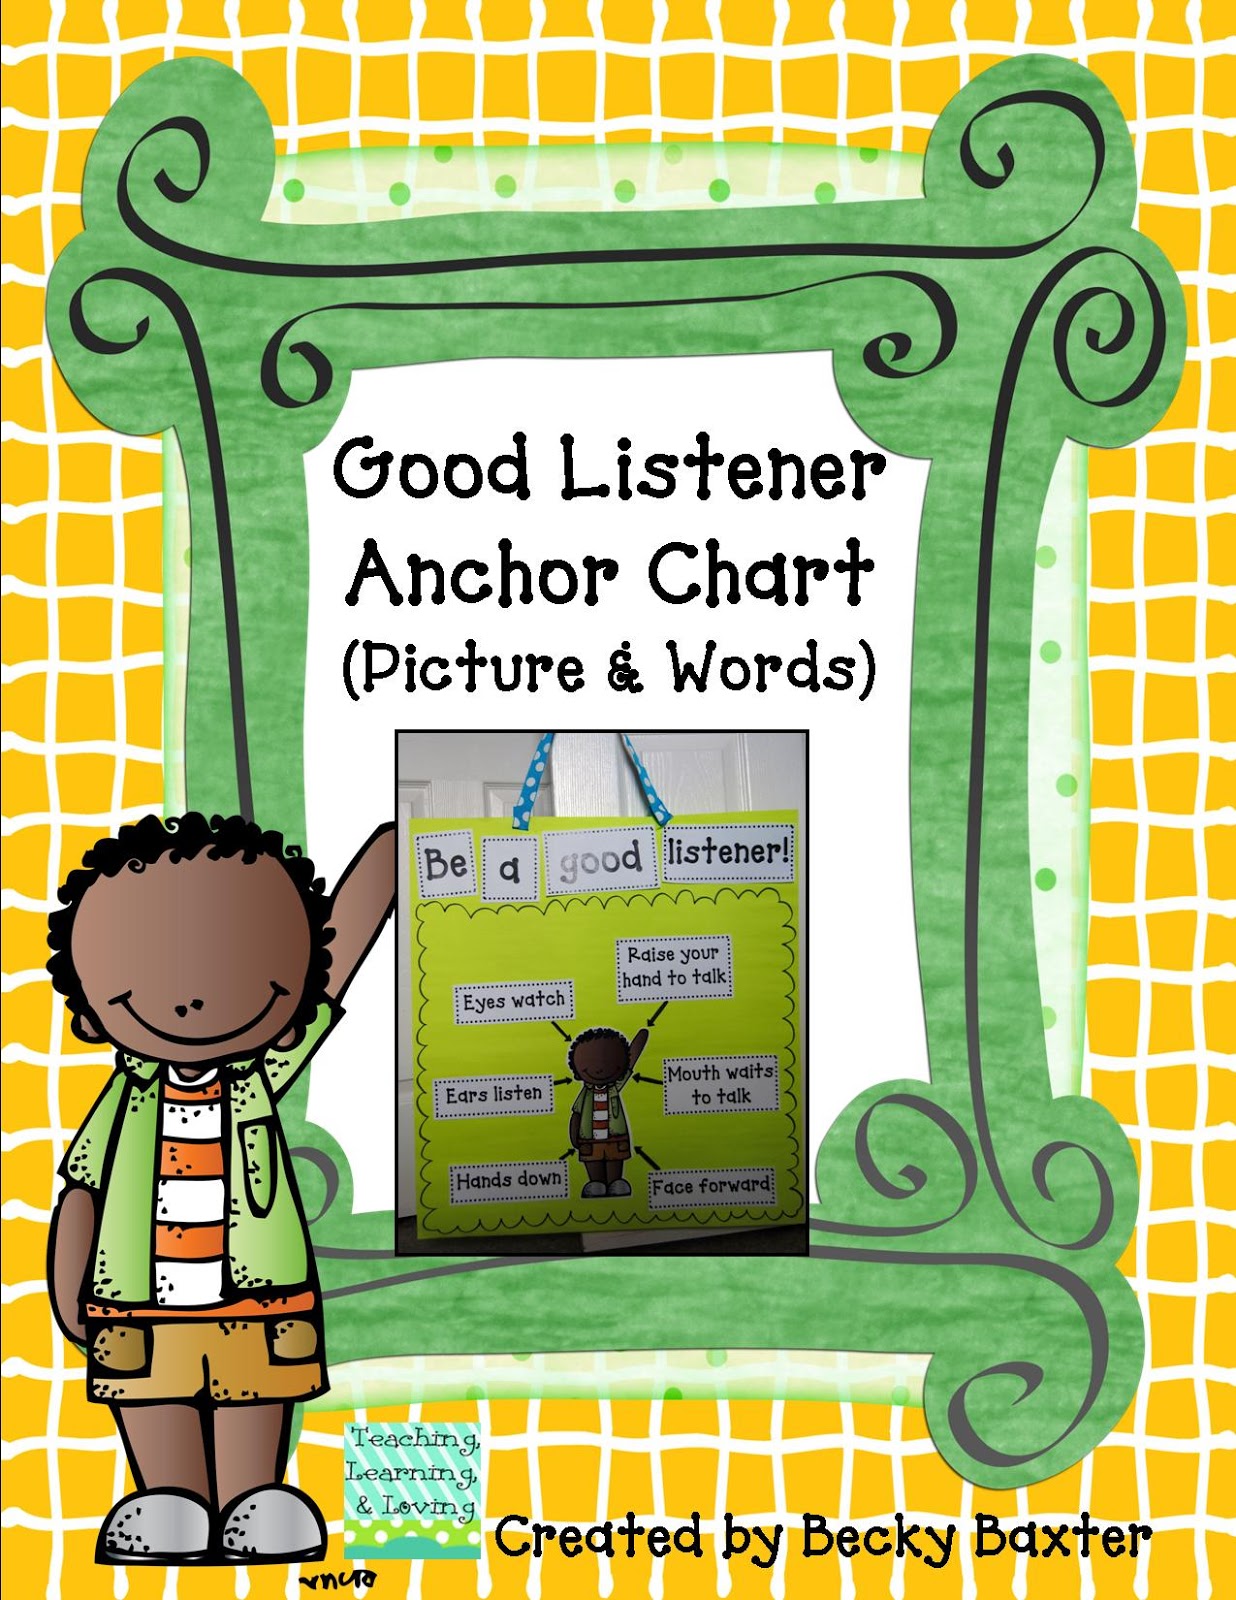 Teaching, Learning, & Loving: Be a Good Listener Anchor Chart- Freebie!!!